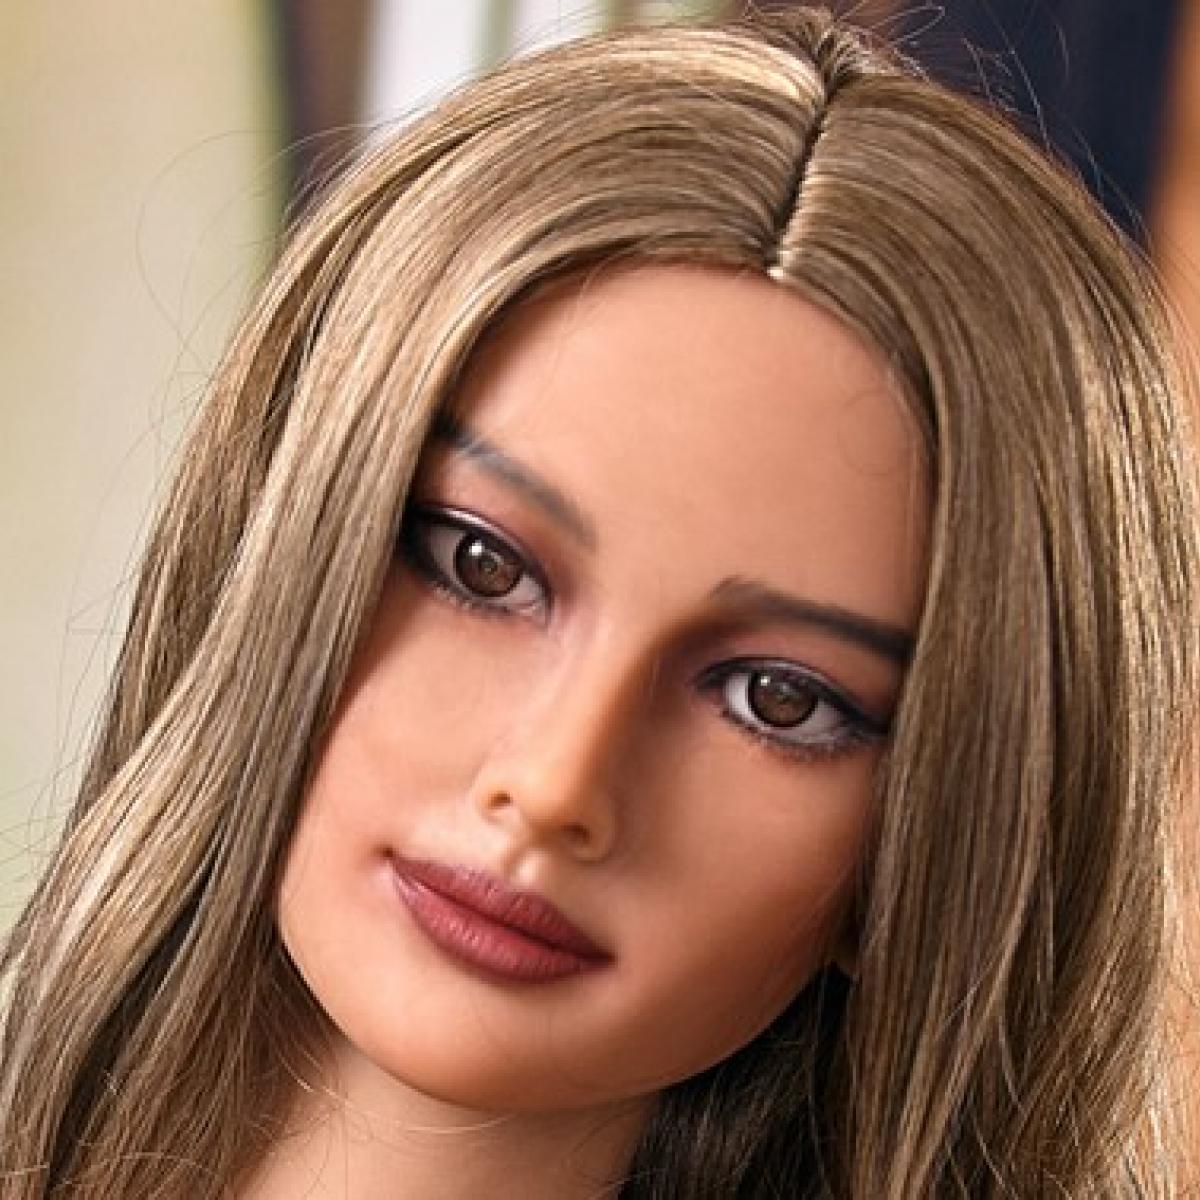 Neodoll Racy Hellen - Sex Doll Head - M16 Compatible - Brown